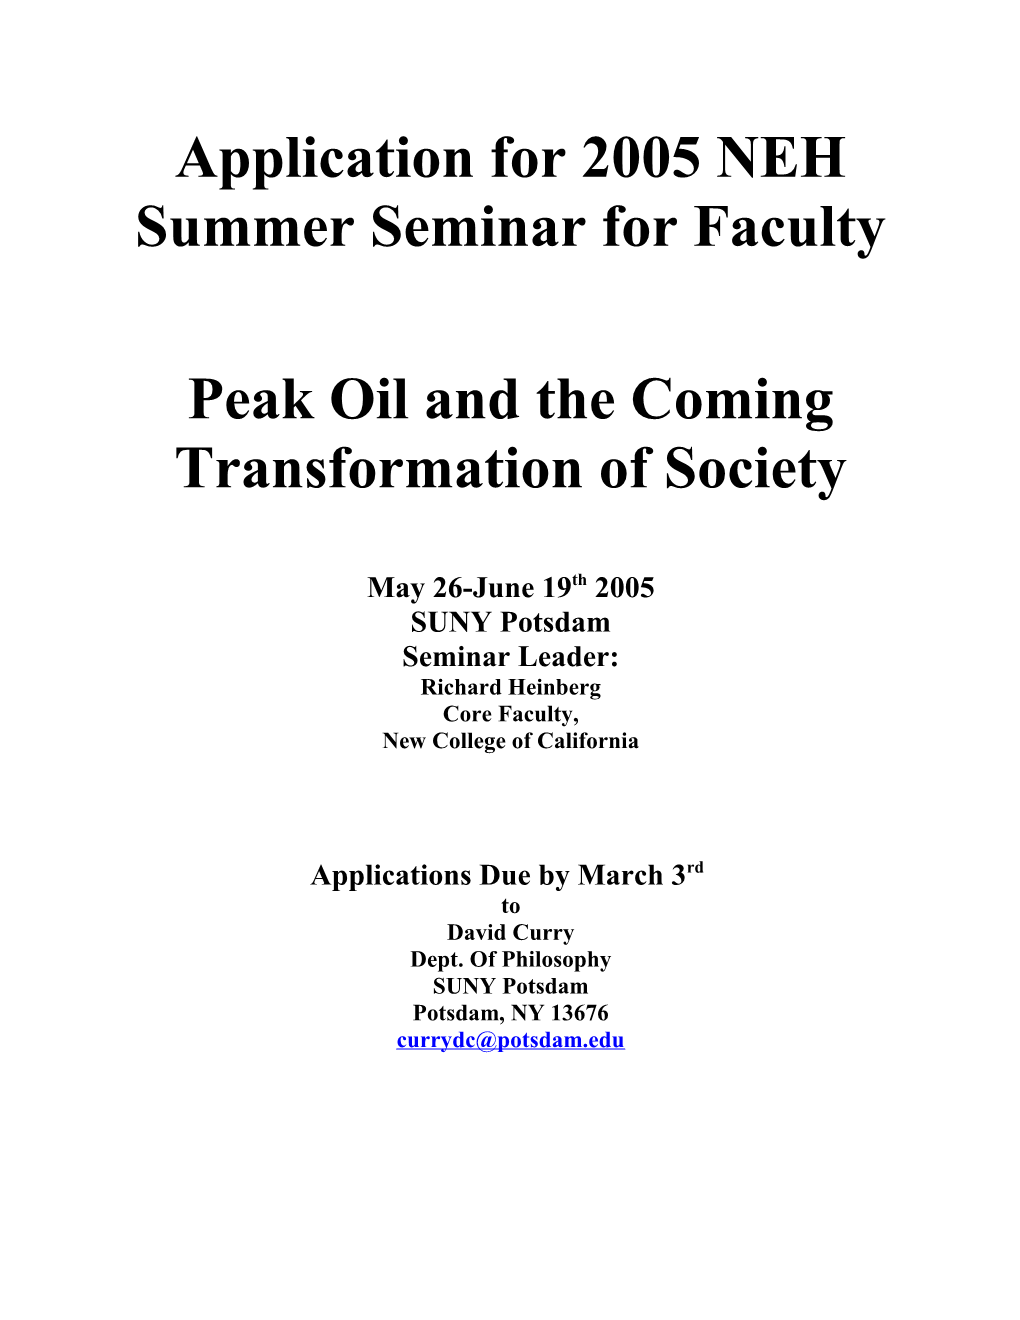 Application for 2005 NEH Summer Seminar for Faculty